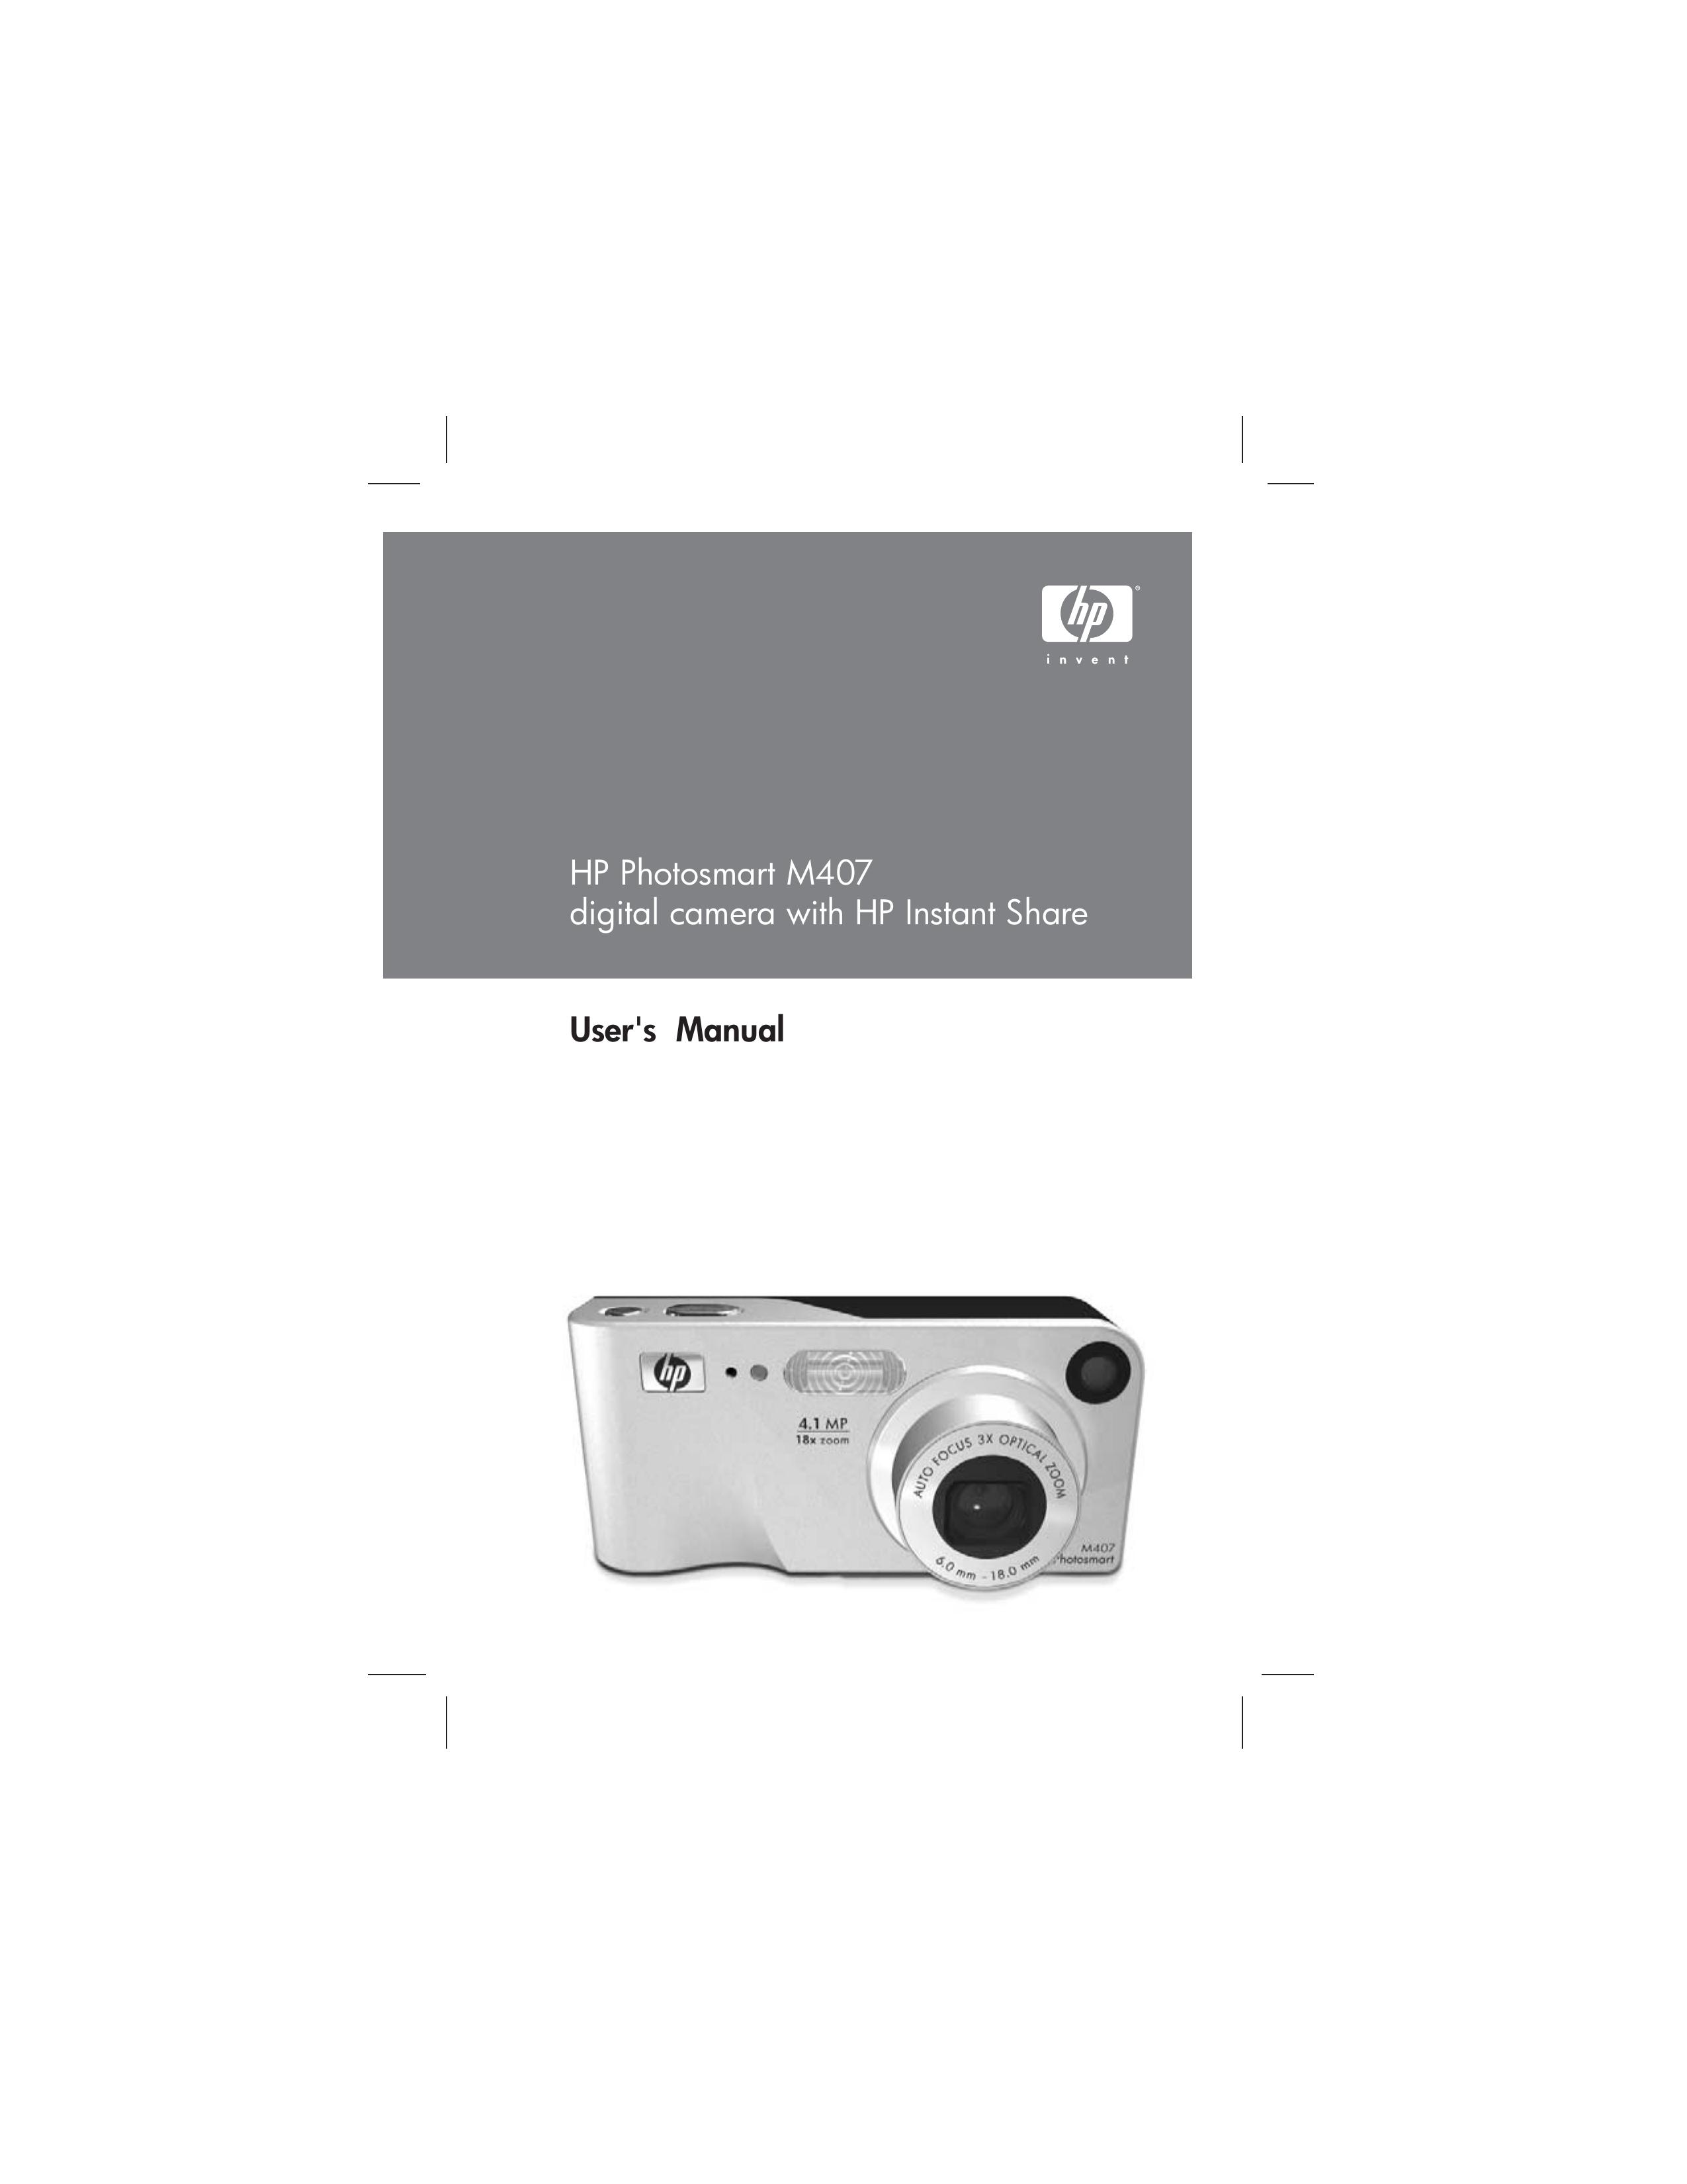 HP (Hewlett-Packard) M407 Digital Camera User Manual